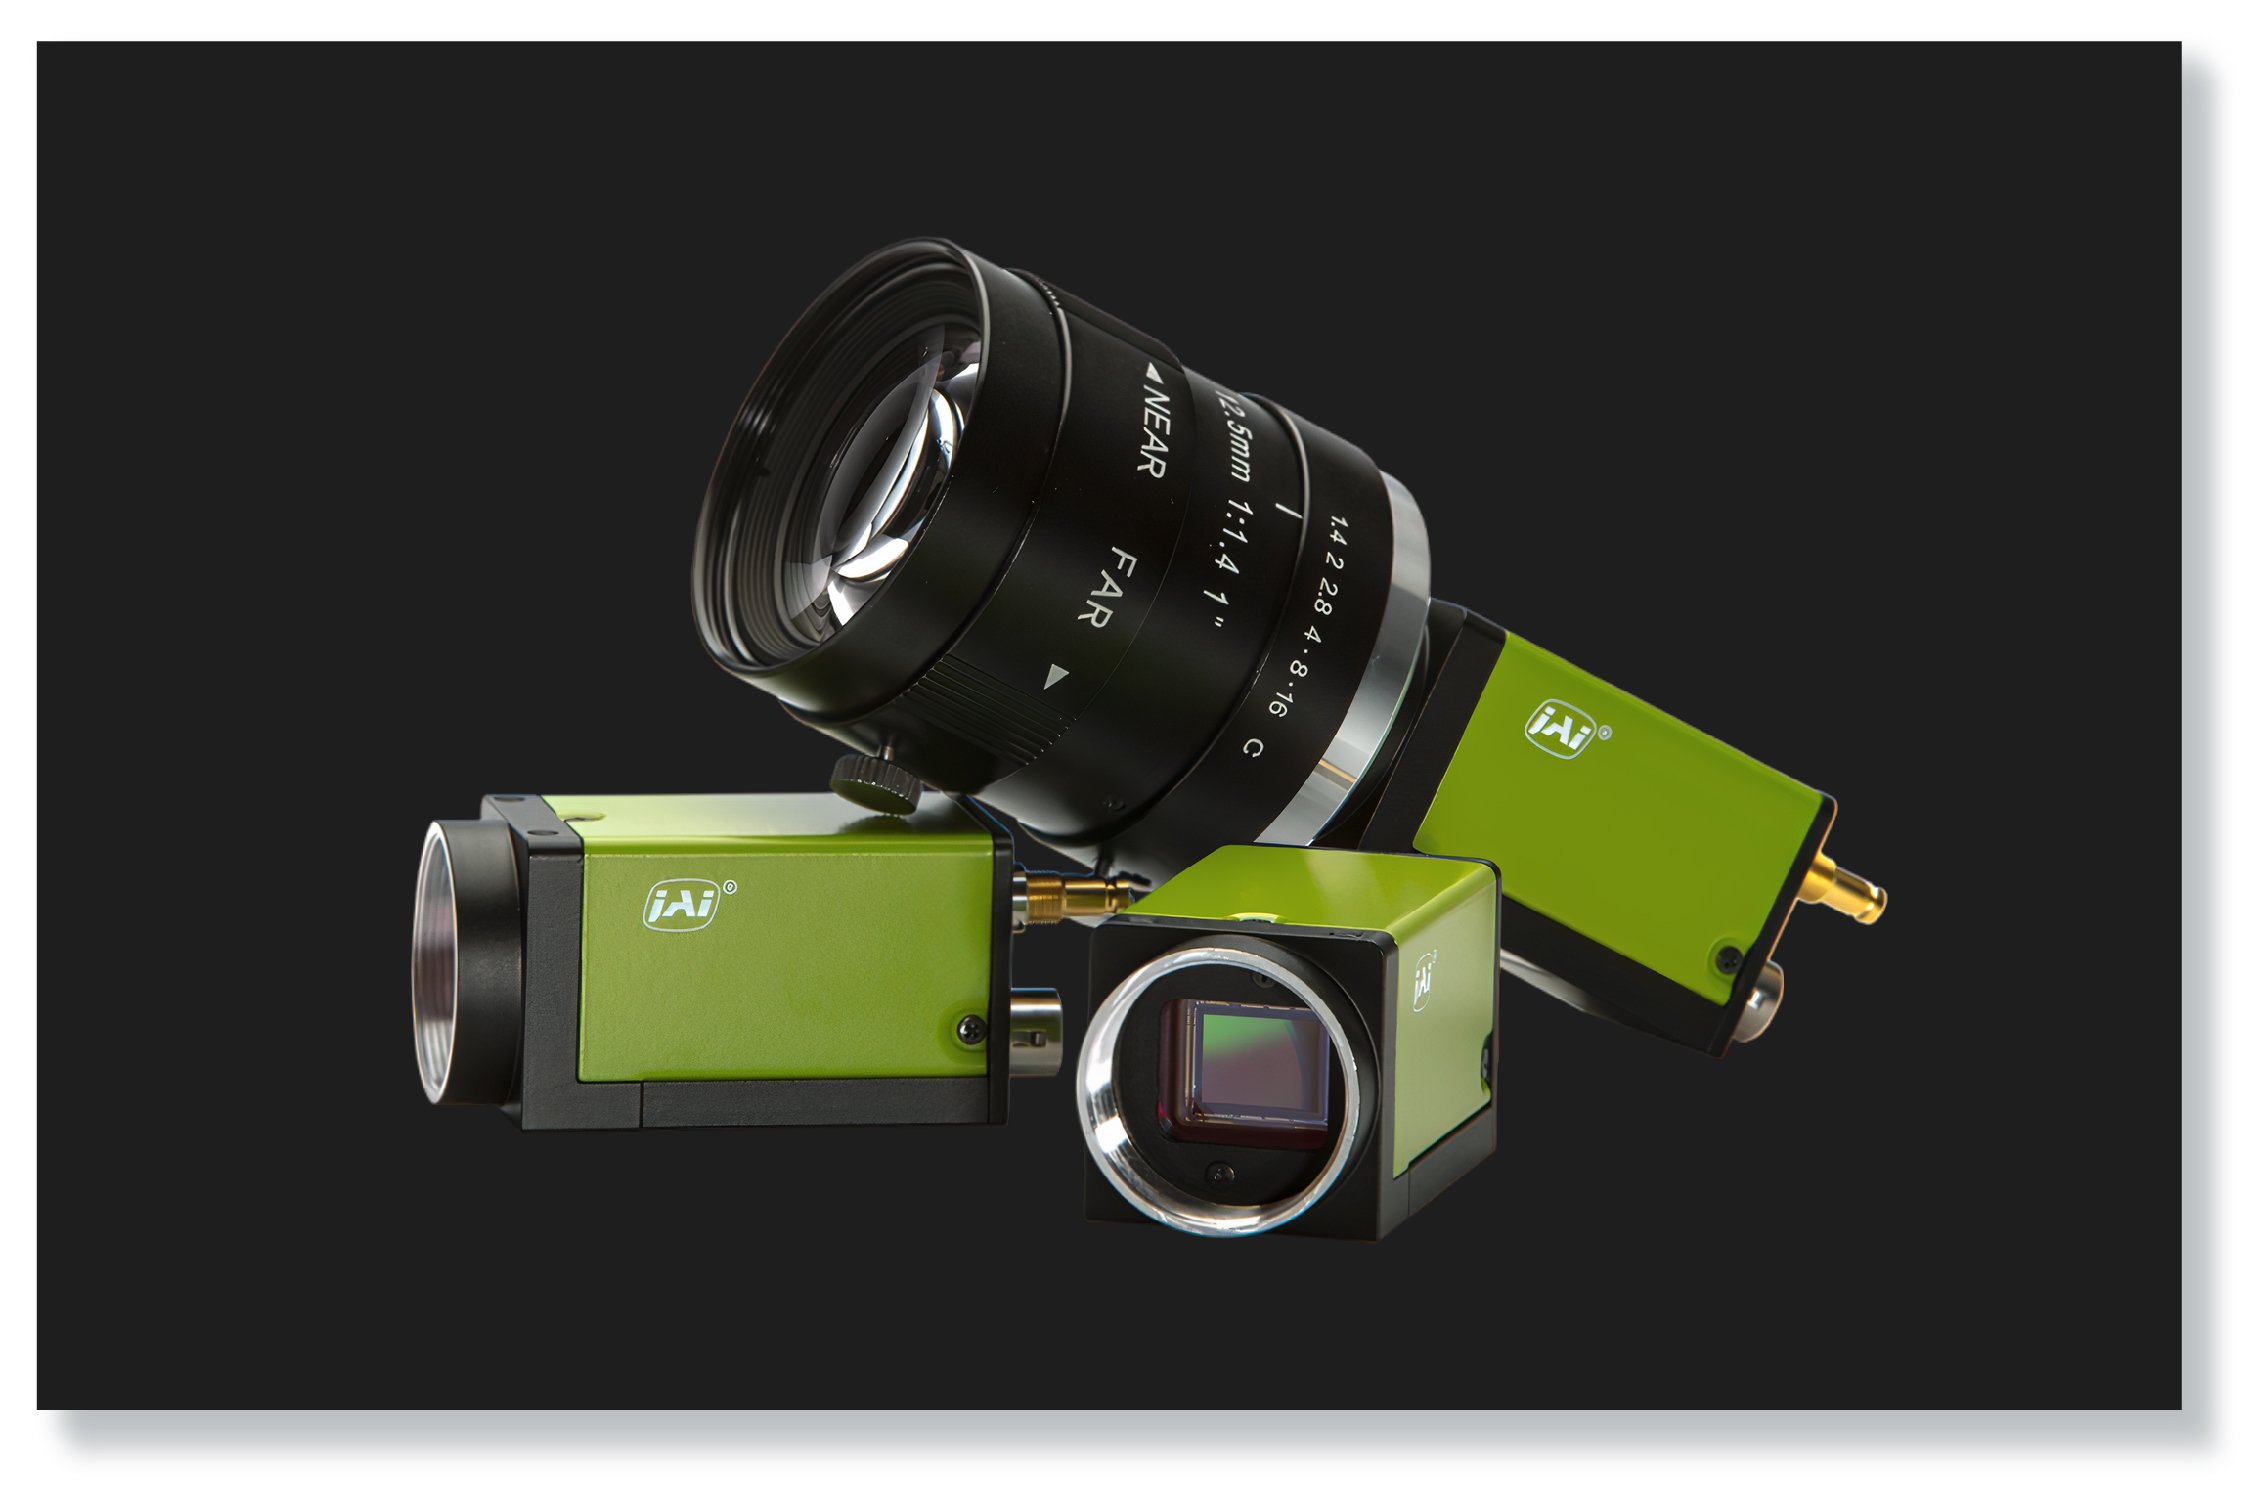 Pregius S 글로벌 셔터 CMOS 센서를 탑재한 높은 화질과 높은 프레임률 - 산업용 카메라 전문 JAI